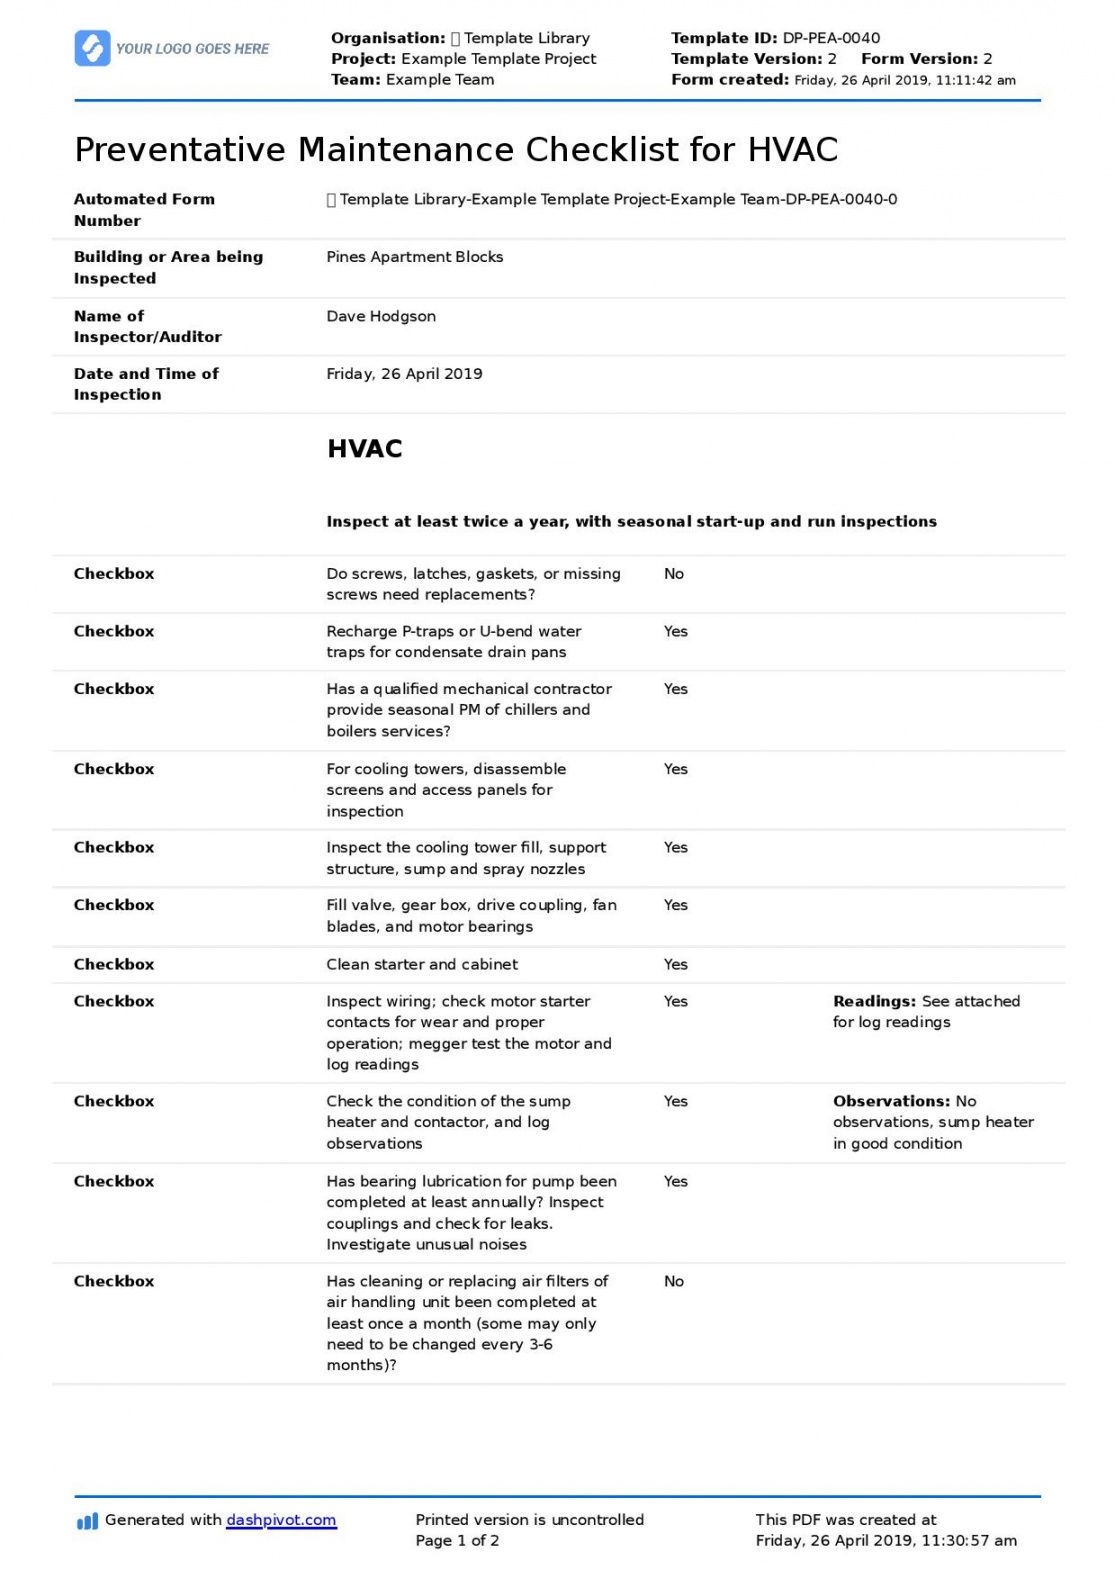 hvac-inspection-checklist-template